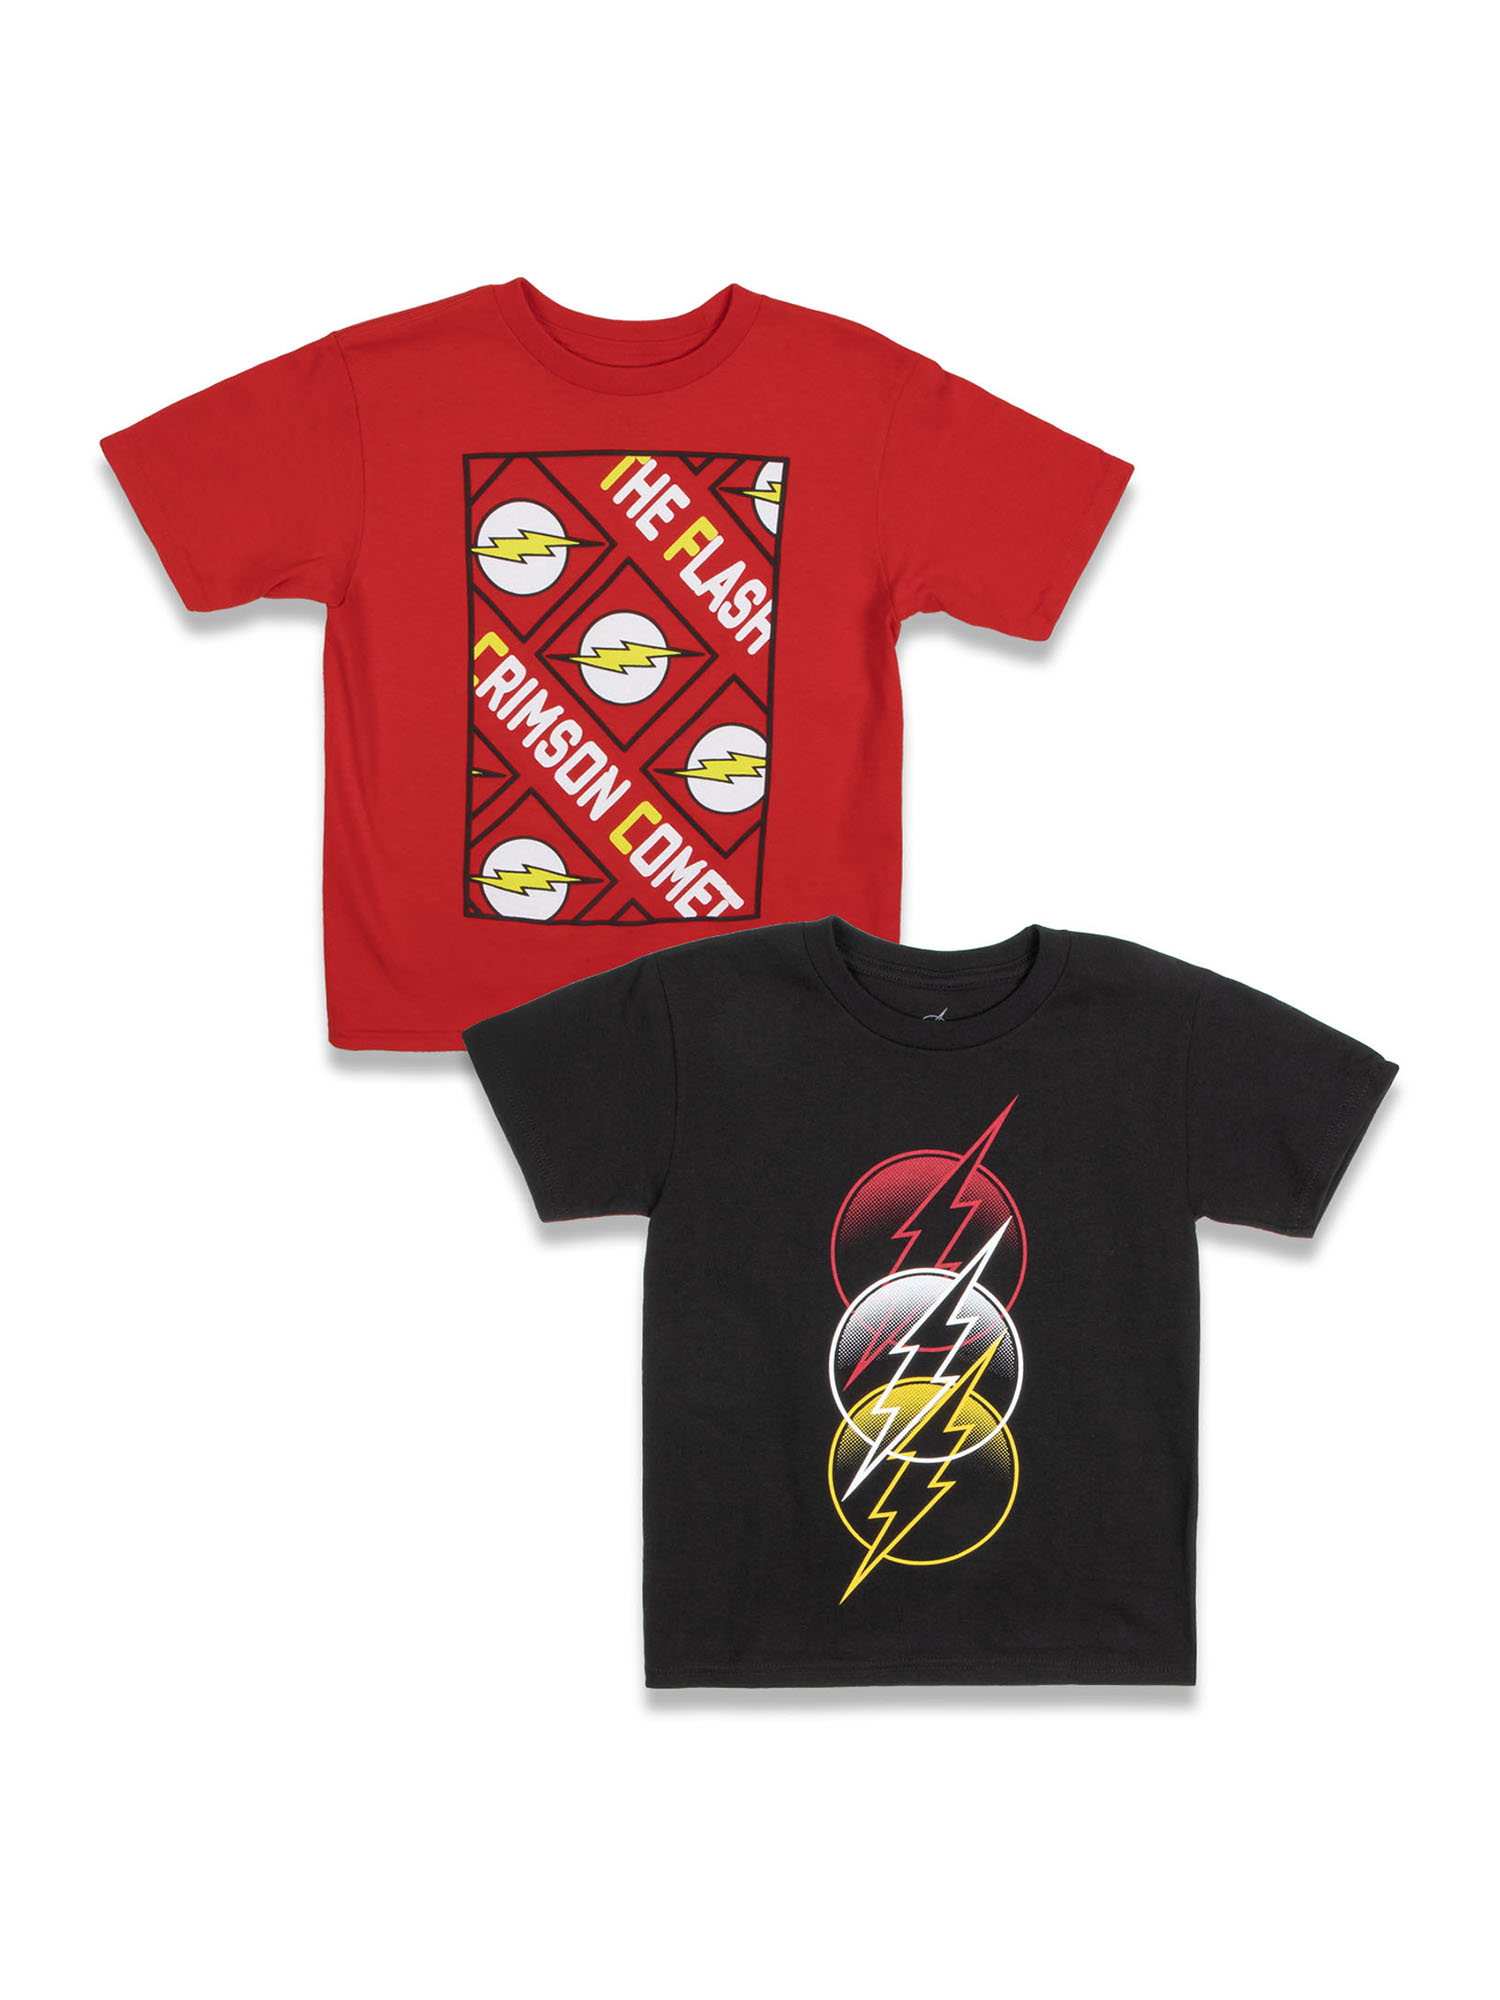 DC Comics The Flash Boys Crimson Comet & 3-Logo Graphic T-Shirts, 2-Pack, Sizes 4-18 - image 1 of 1